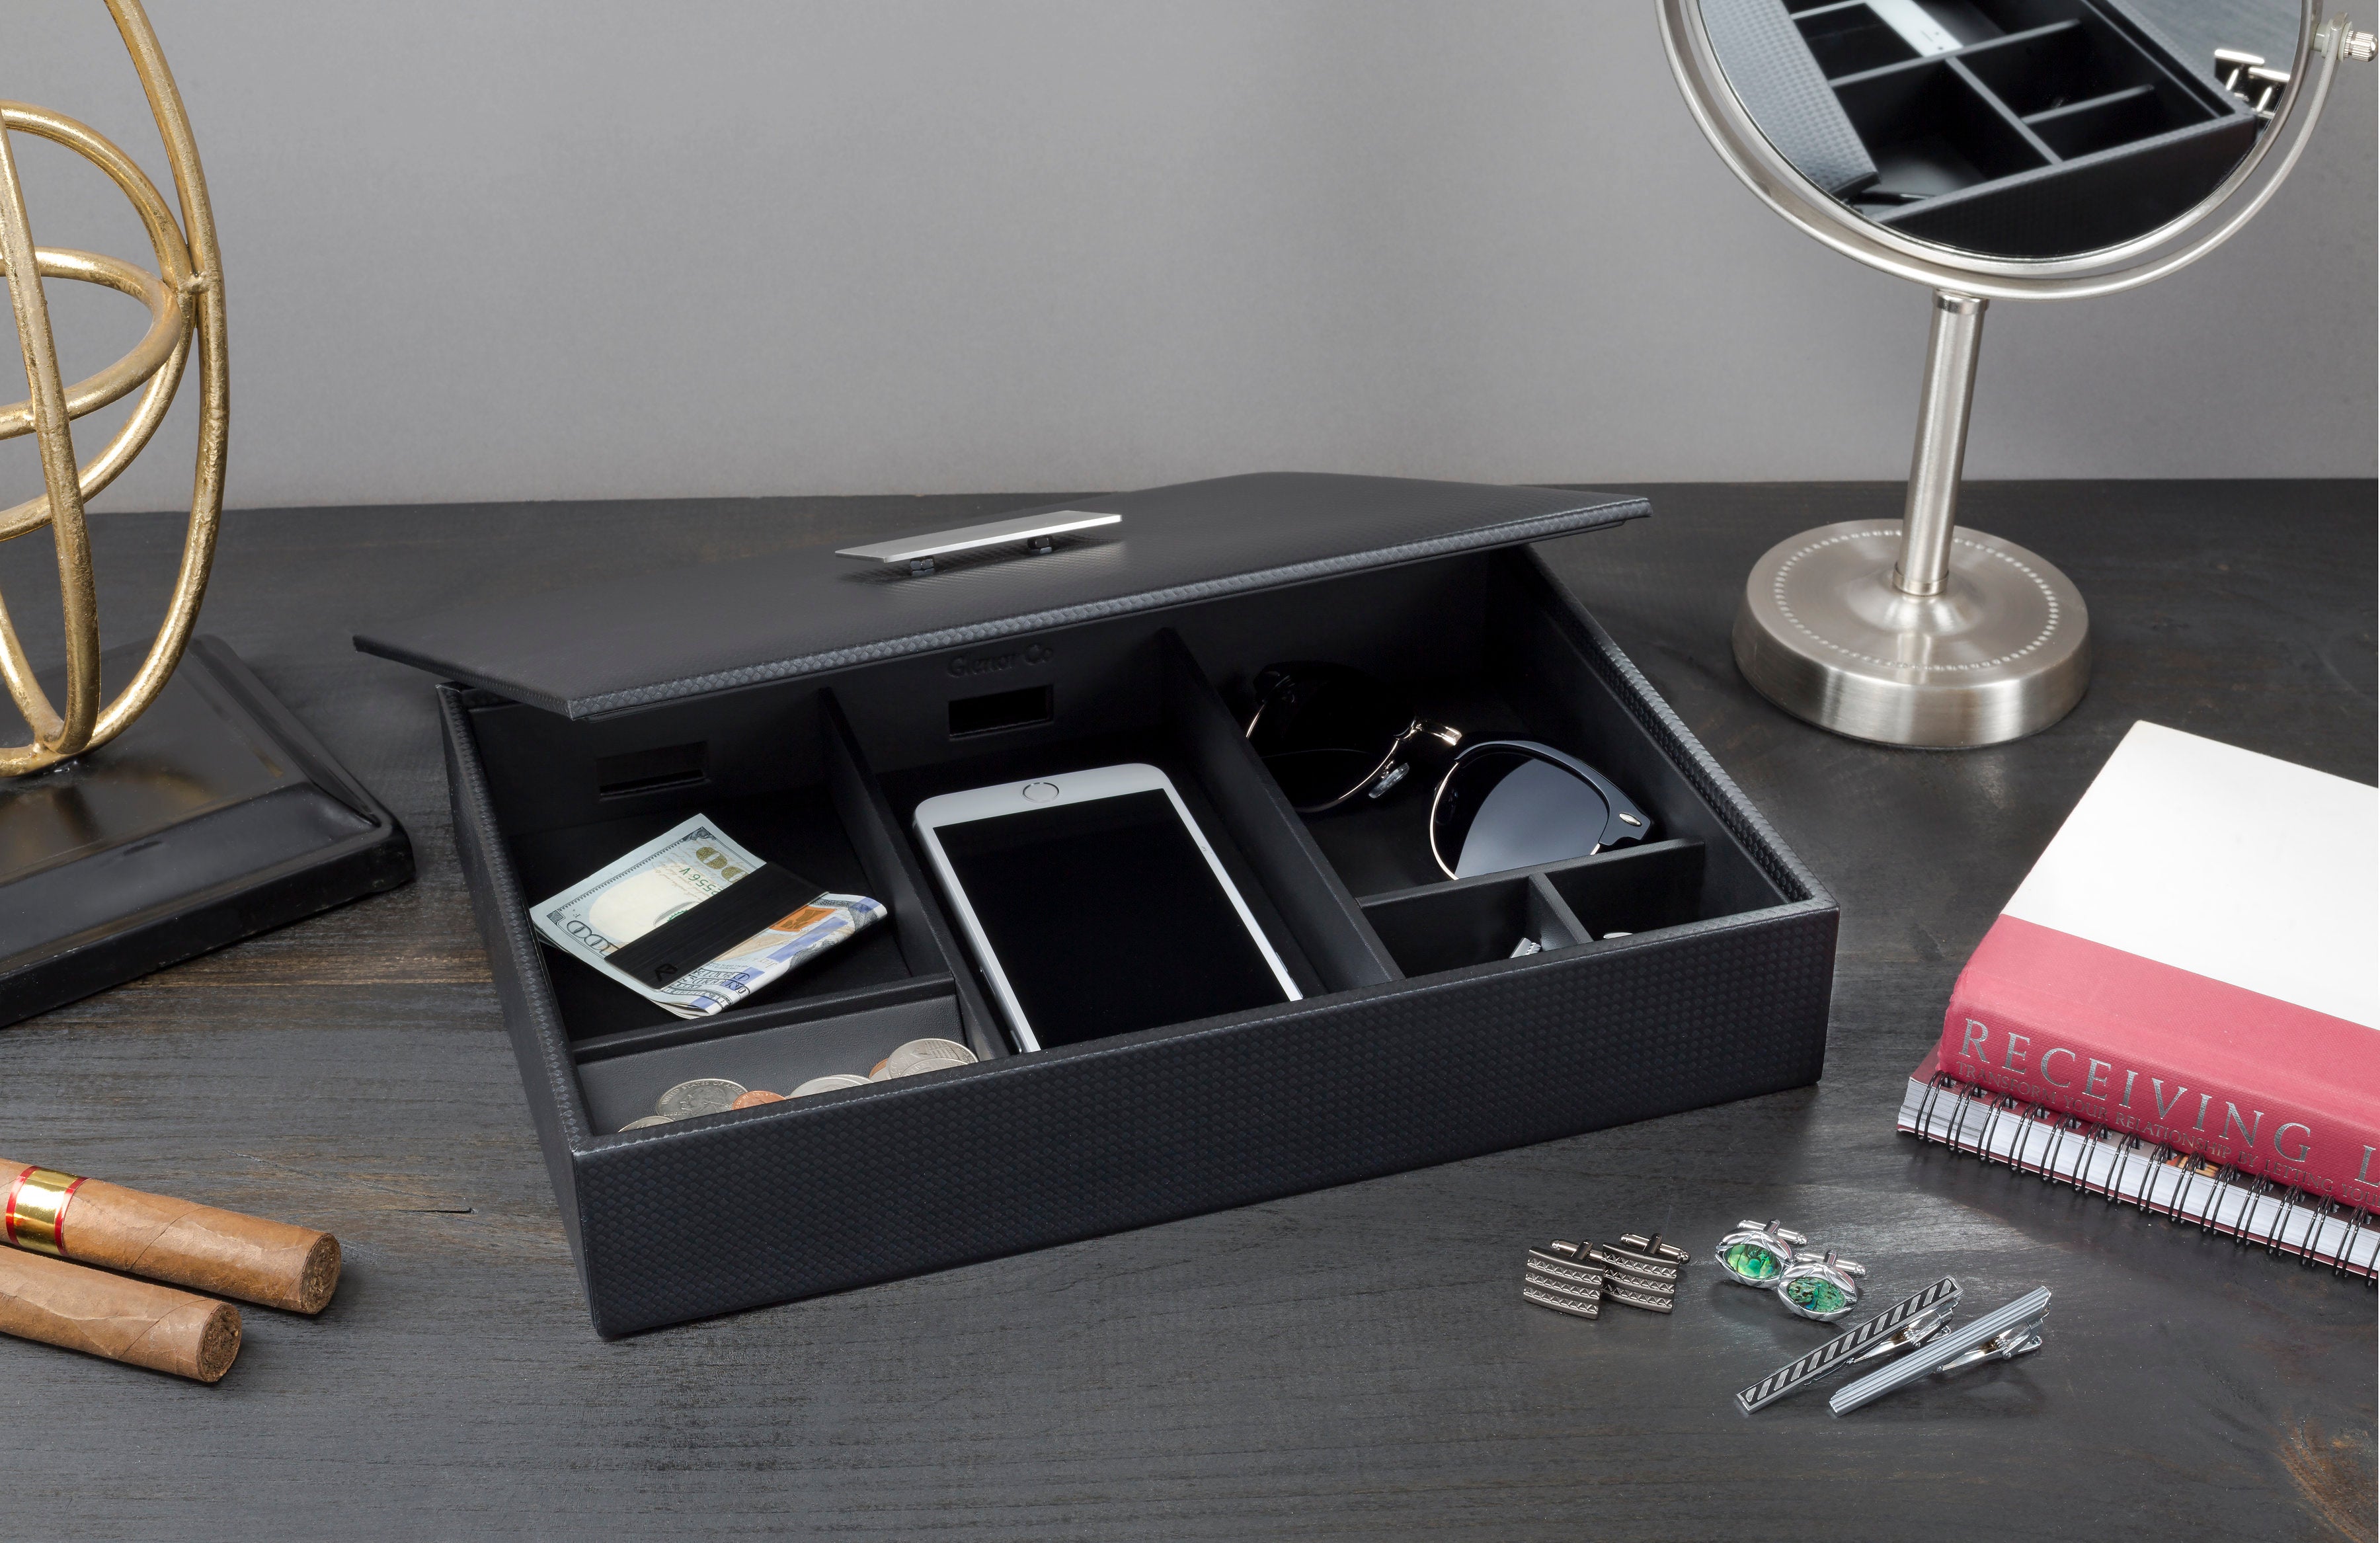 Mens Valet Tray / Dresser Organizer & Lid - 6 Slot Luxury Jewelry Accessories Box